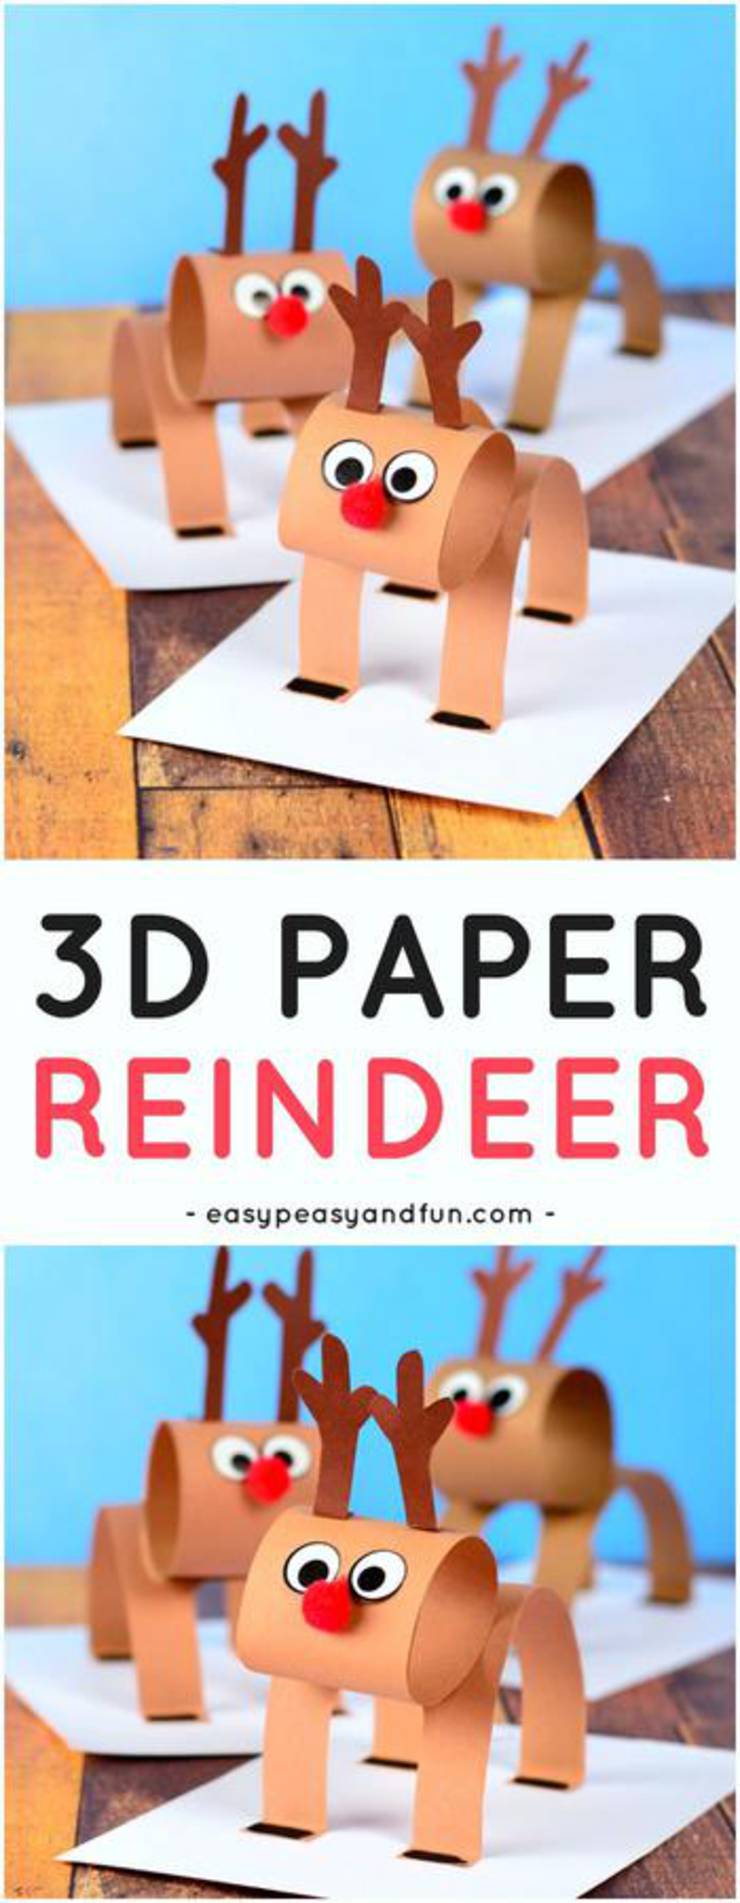 3D Construction Paper Reindeer